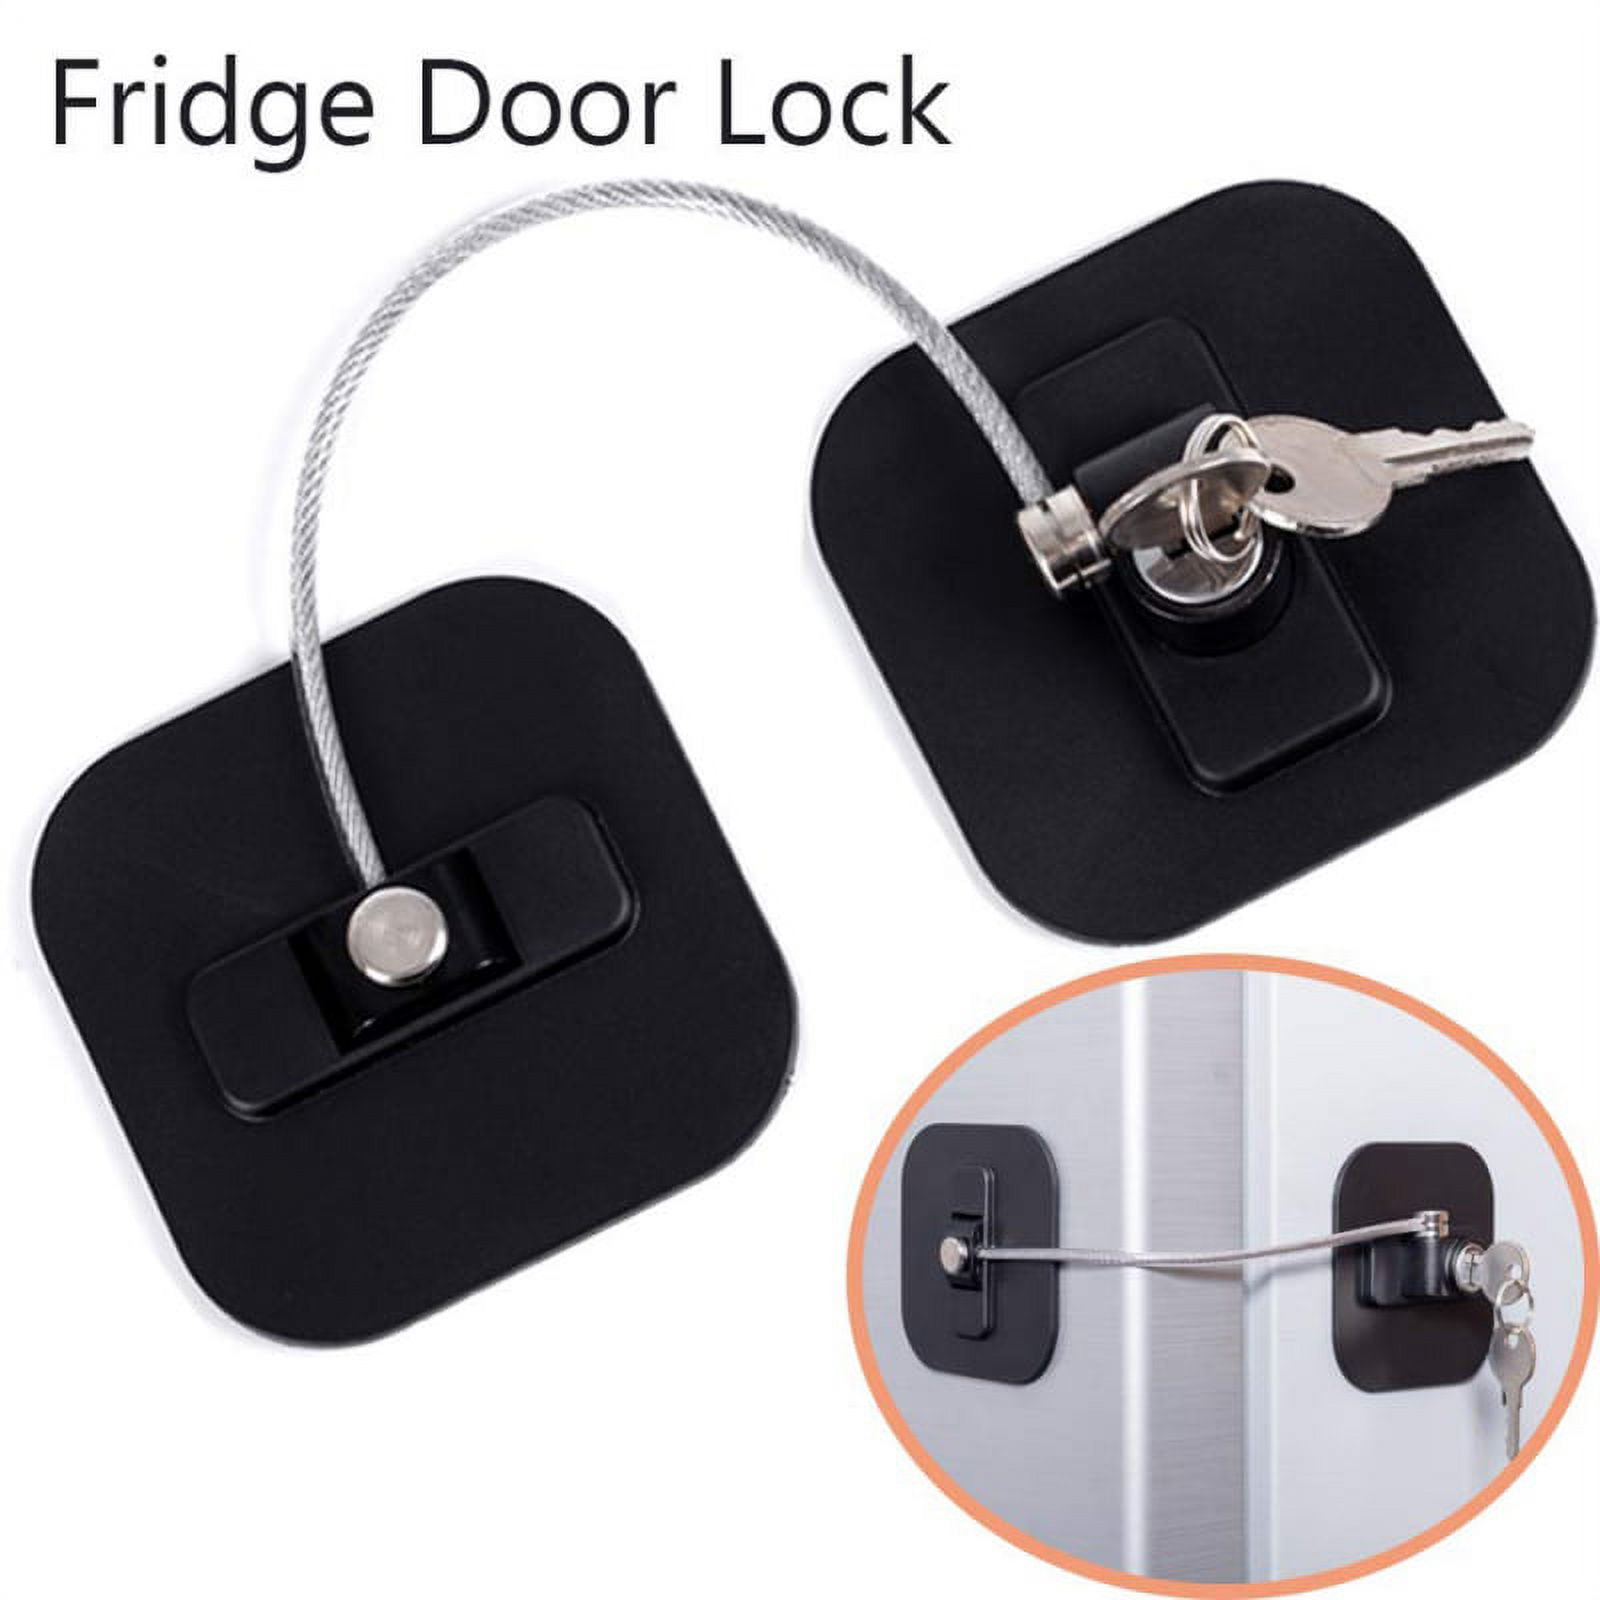 ABS+Steel Wire Refrigerator Window Kids Safety Password Lock Drawer Cabinet Fridge  Door Lock - Black Oval Password Lock